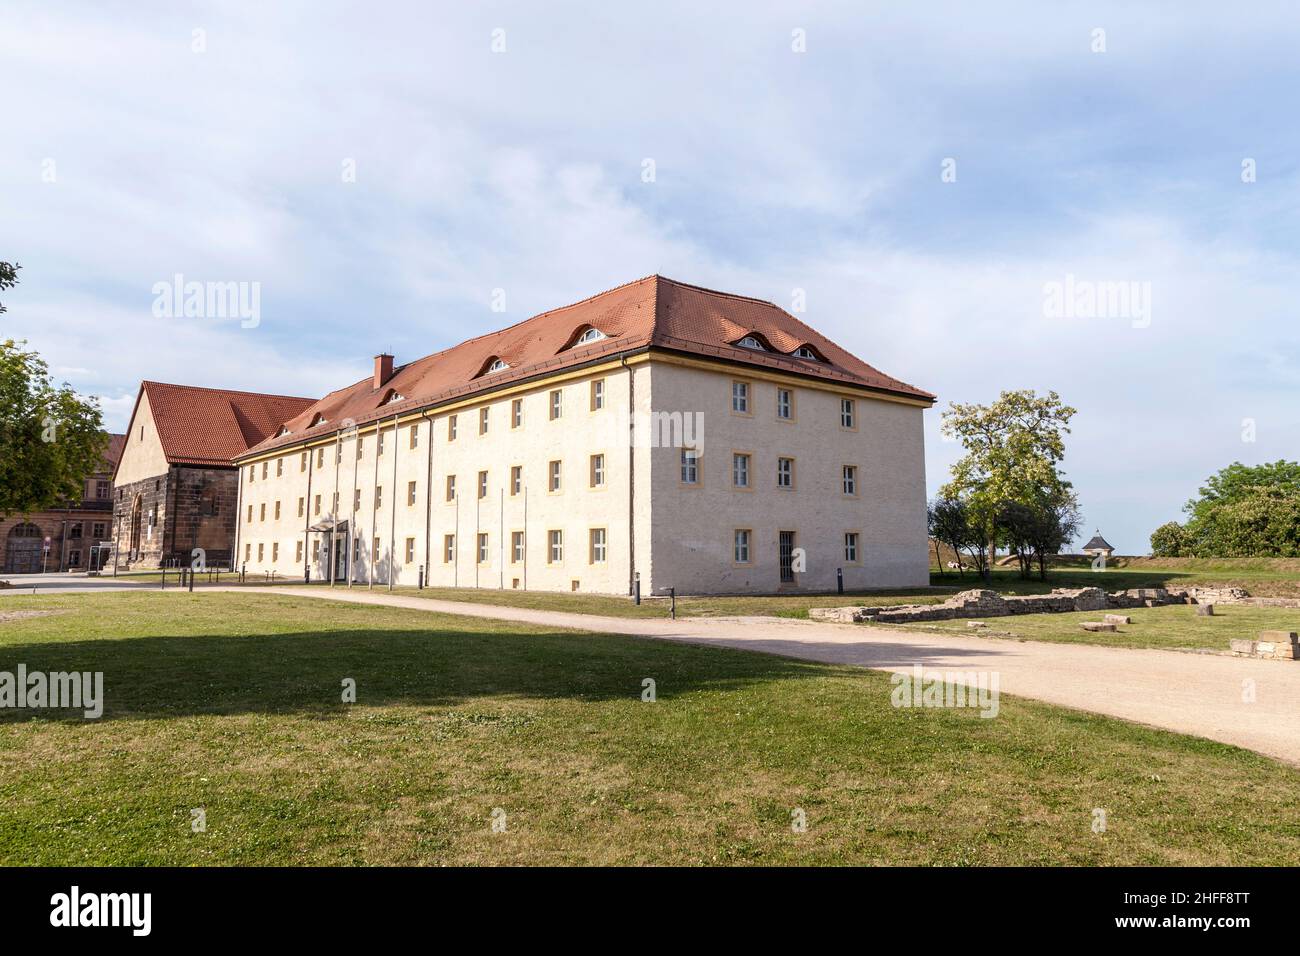 Petersberg Citadel in Erfurt is one of the biggest still existing early-modern citadels in Europe Stock Photo